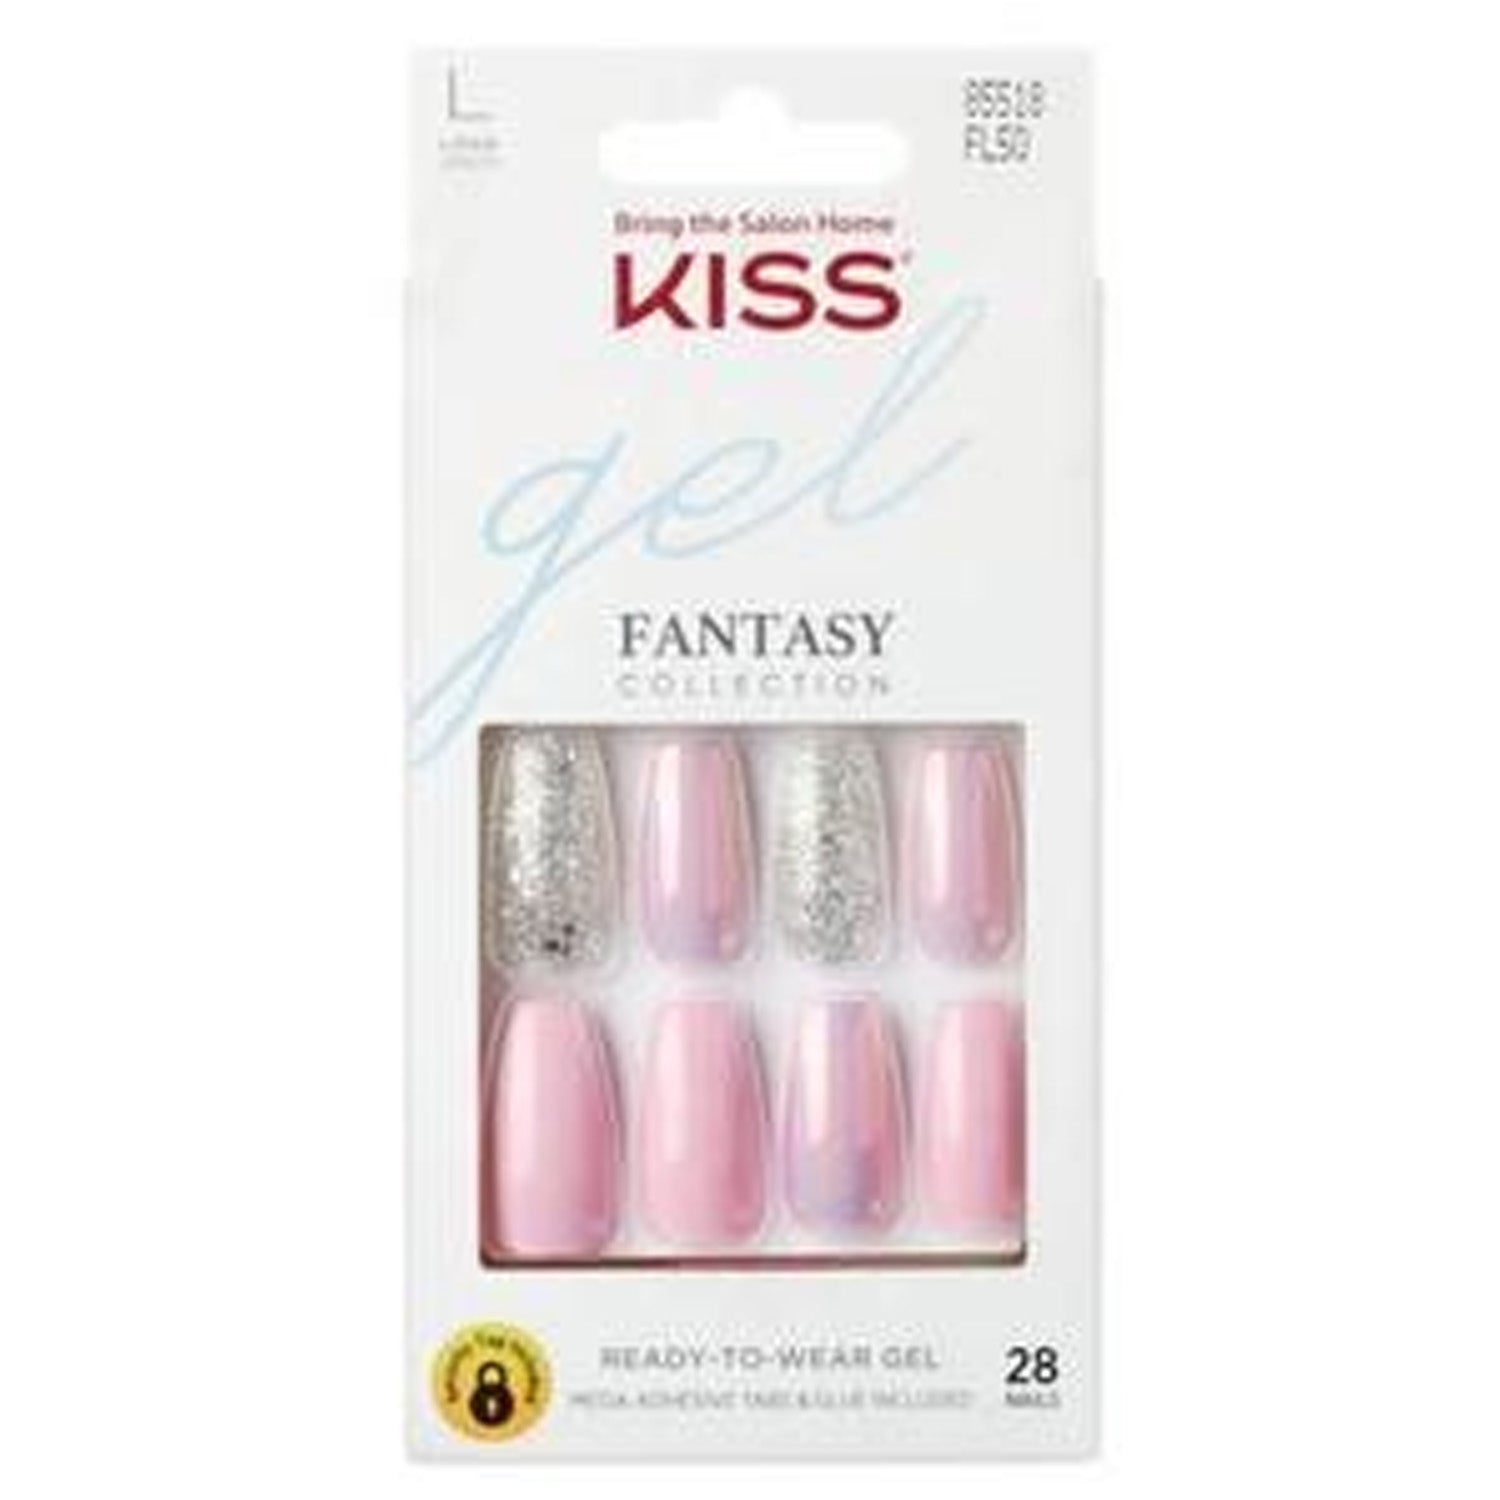 KISS GEL FANTASY COLLECTION #FL50